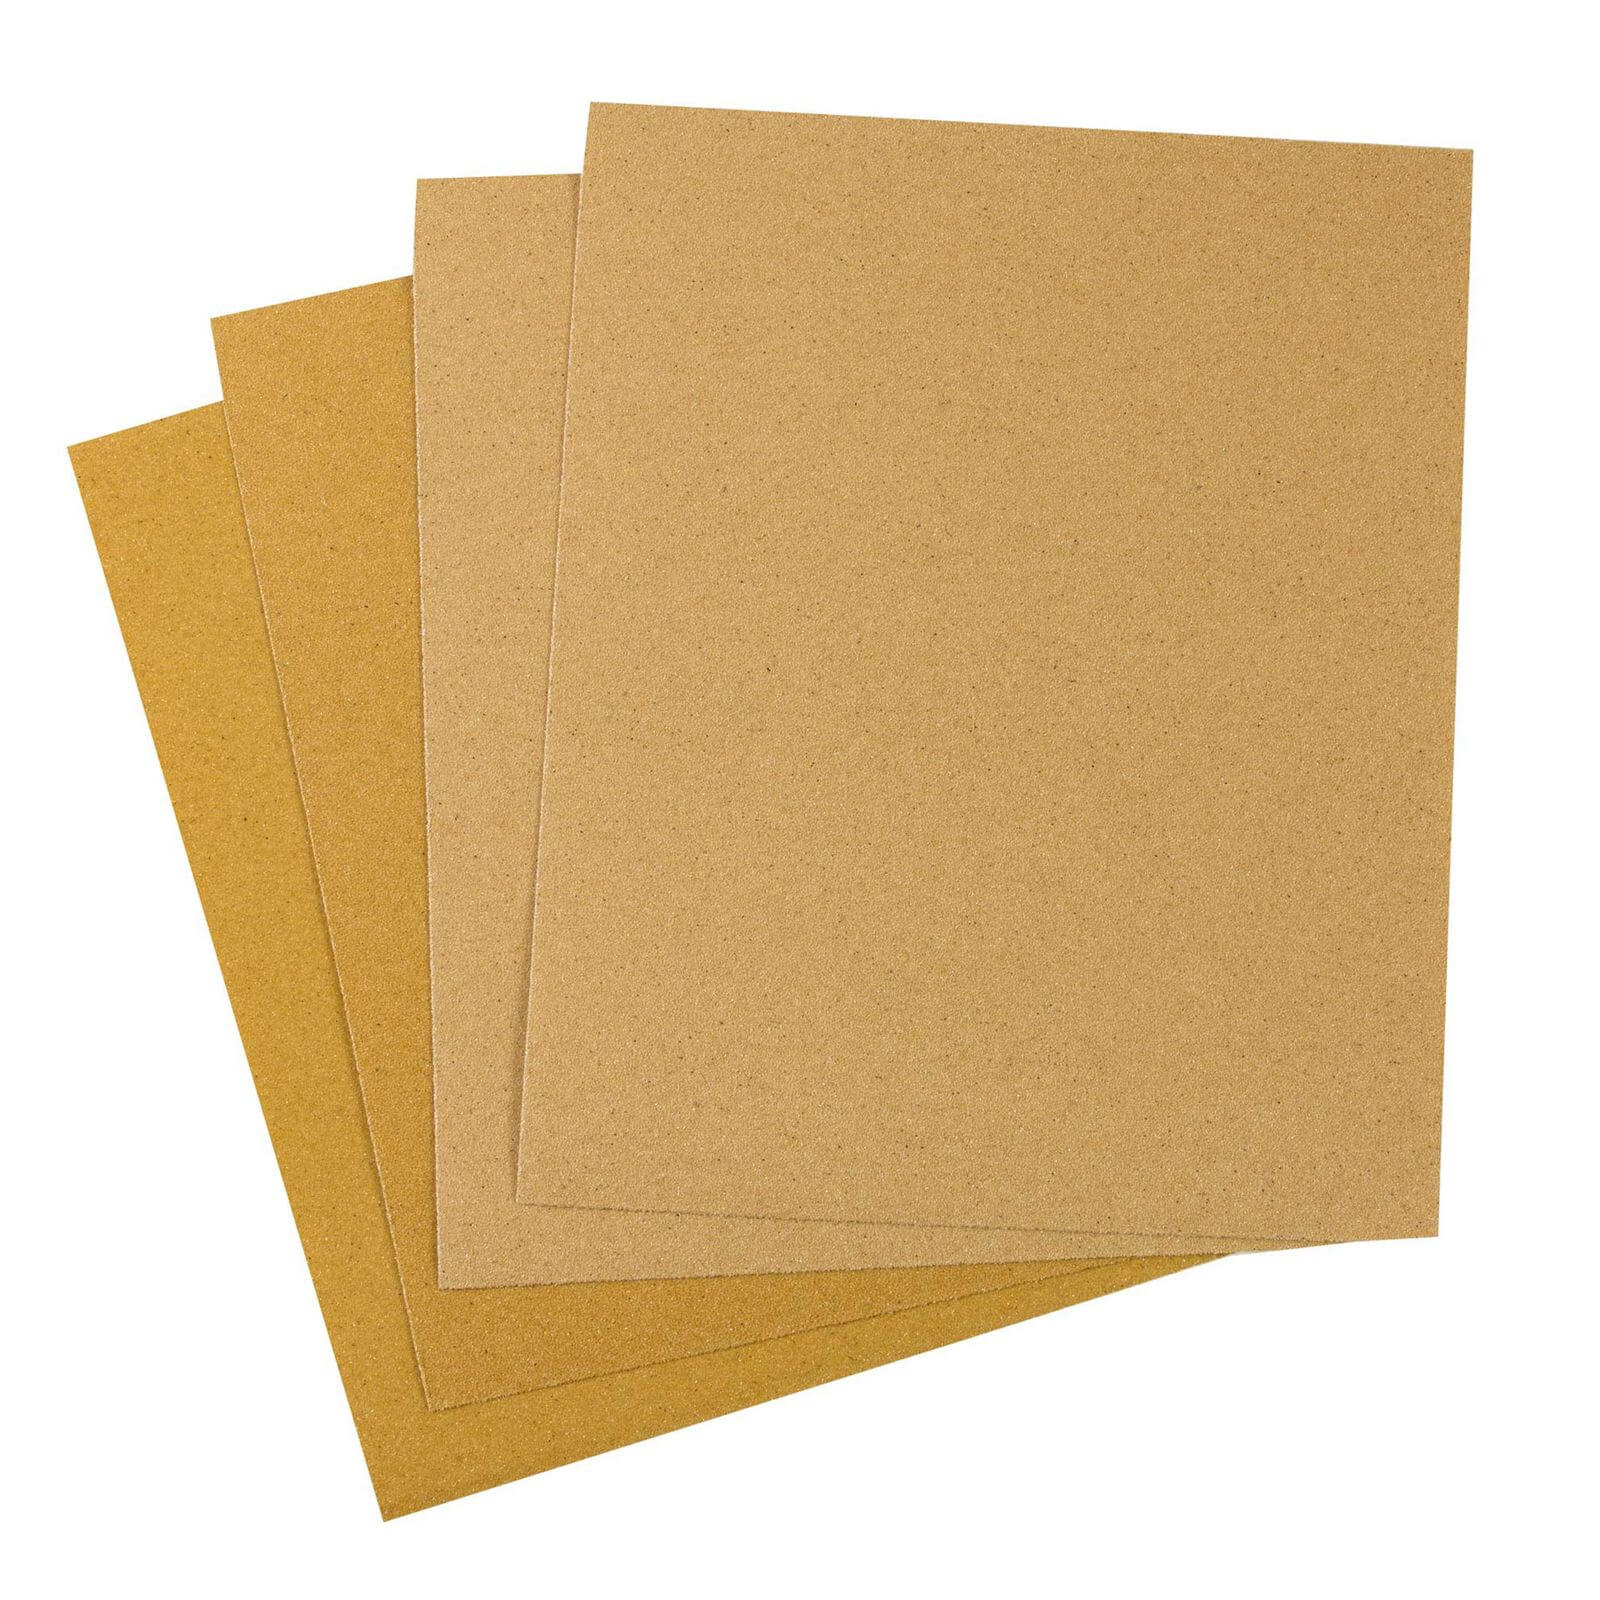 Harris Taskmasters Assorted Sandpaper - 4 Pack